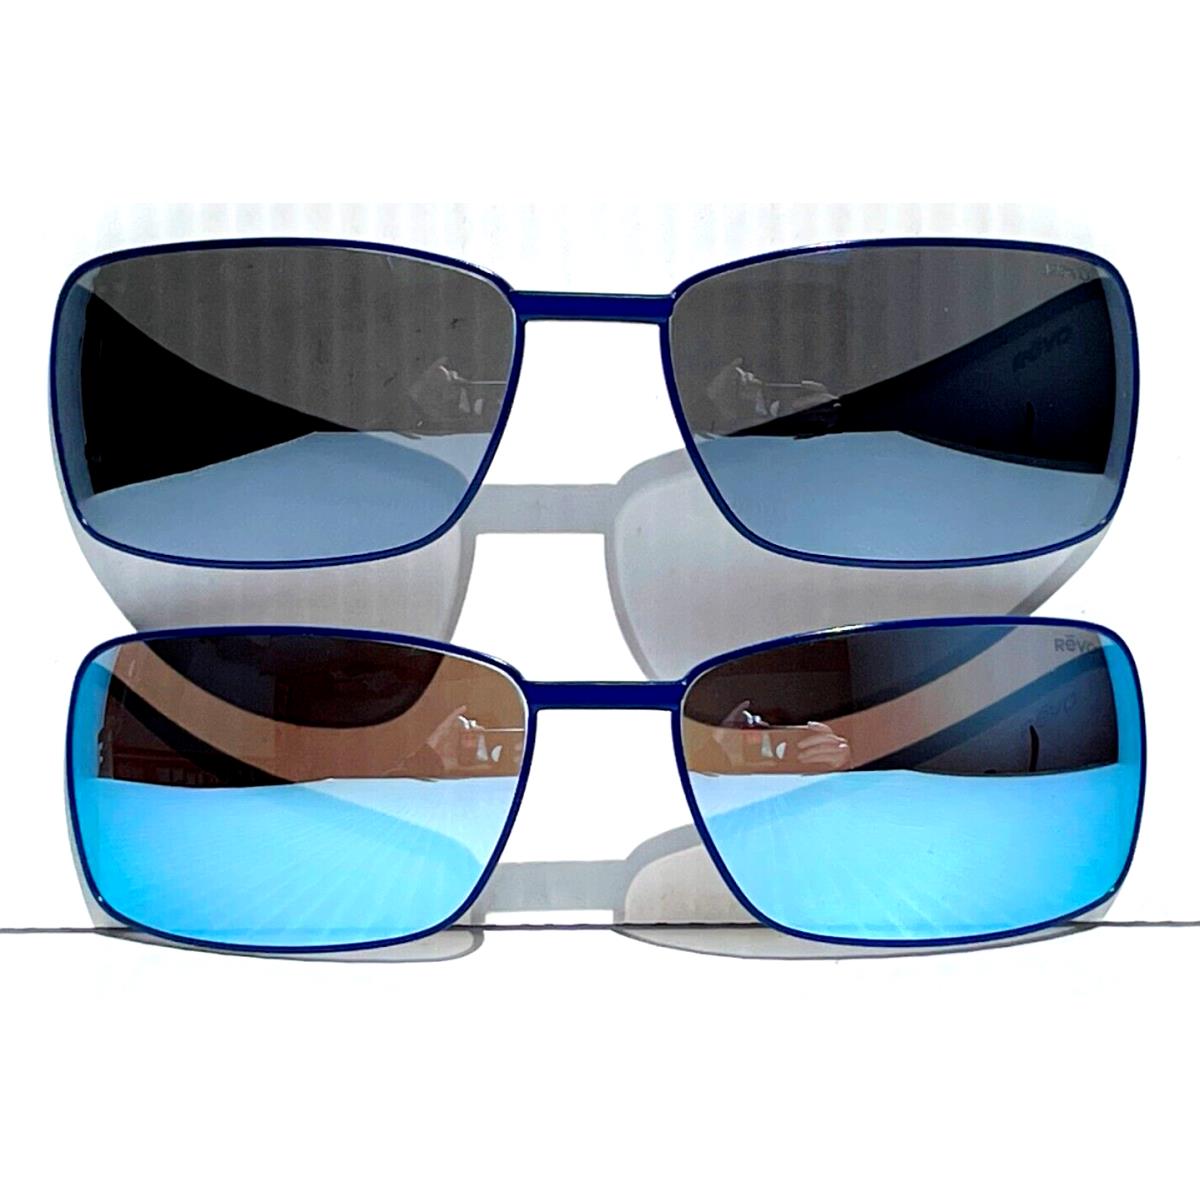 Revo Eclipse Matte Blue Polarized 2 Lens Blue Chrome Sunglass 1189 05 Blp+gy